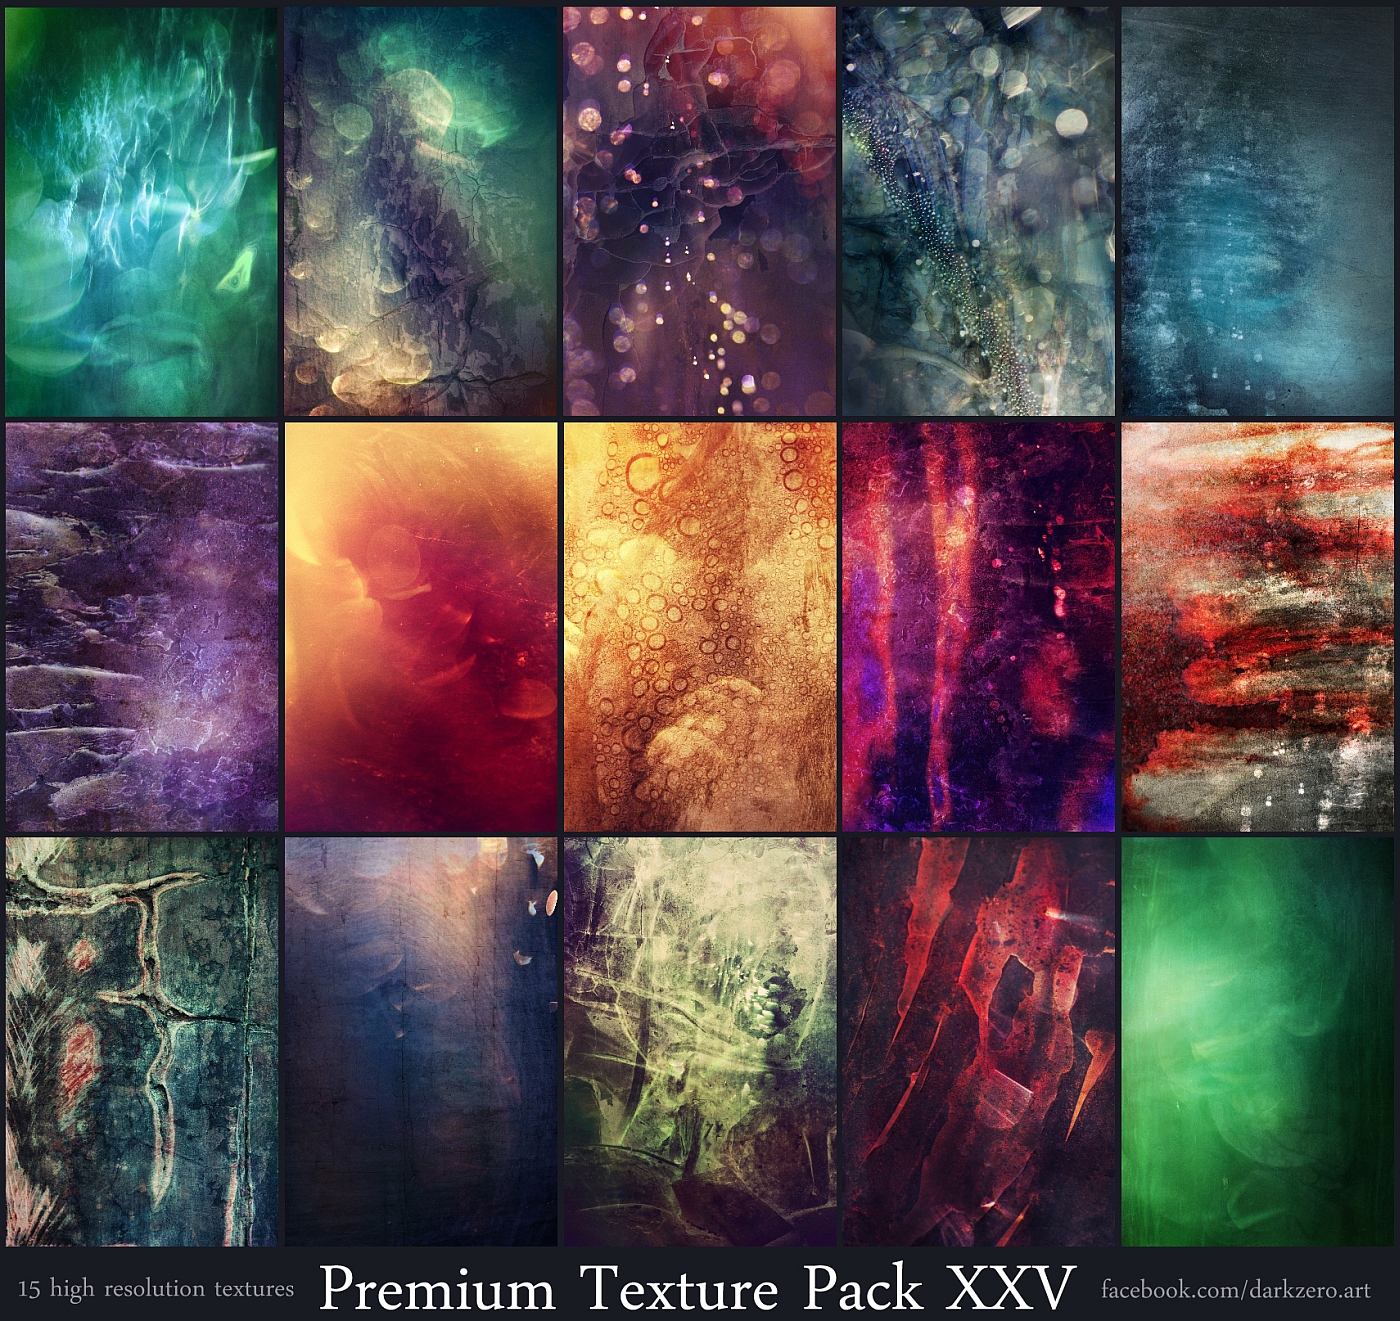 Premium Texture Pack XXV